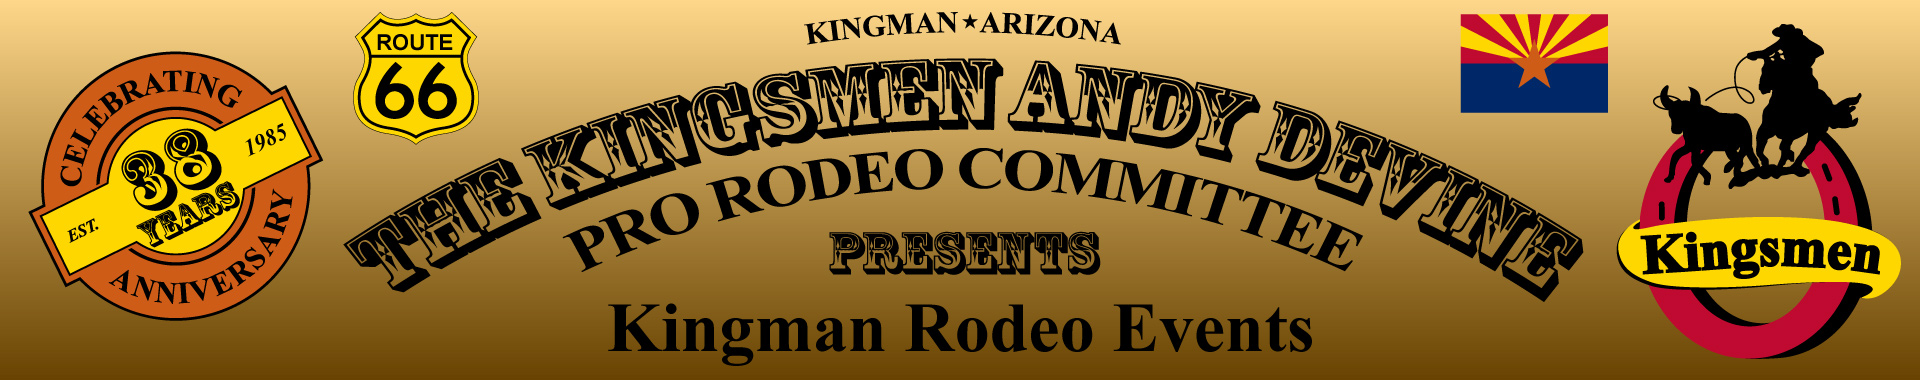 Kingman Rodeo